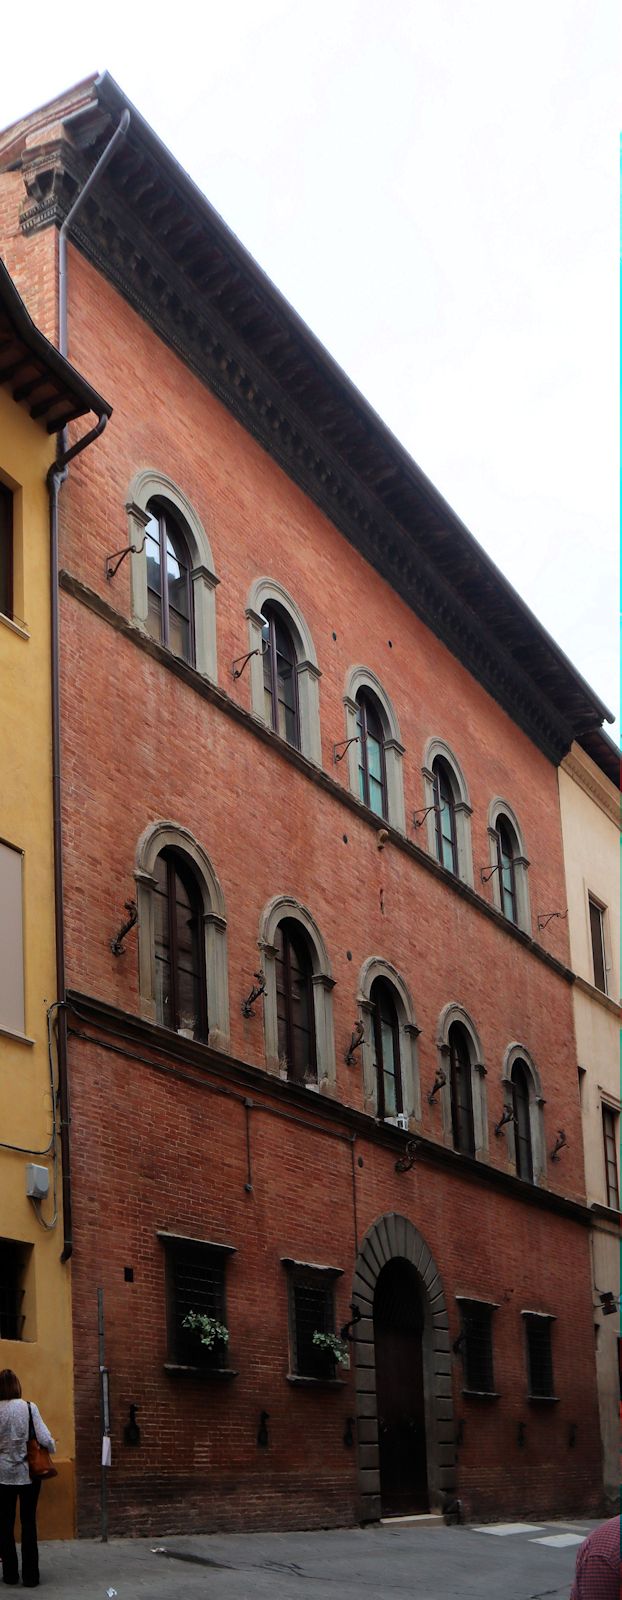 Palazzo Venturi Gallerani in Siena